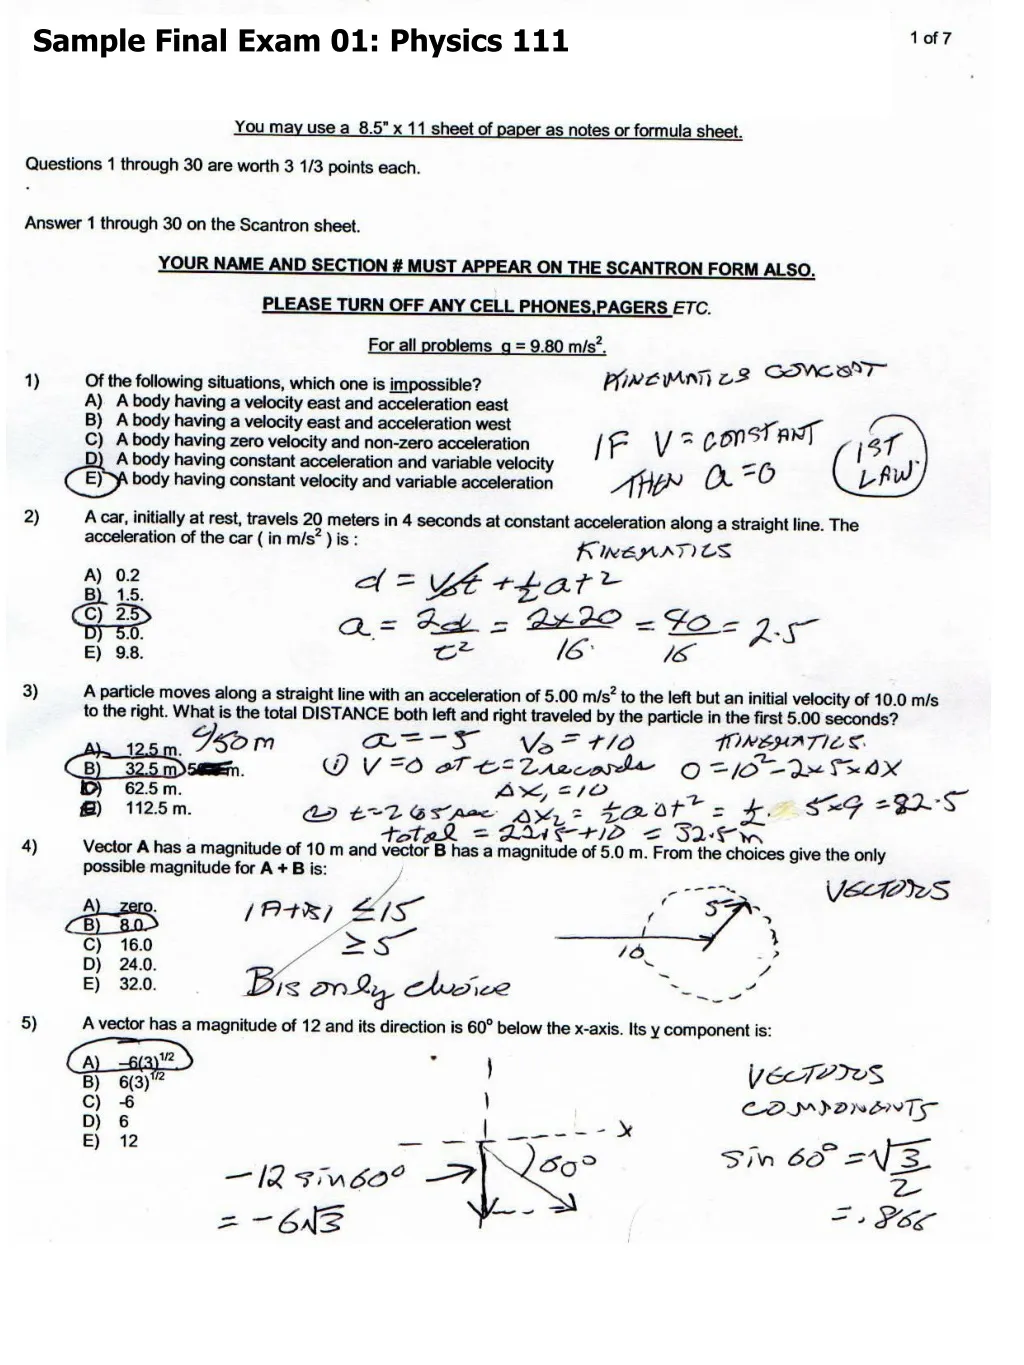 sample final exam 01 physics 111